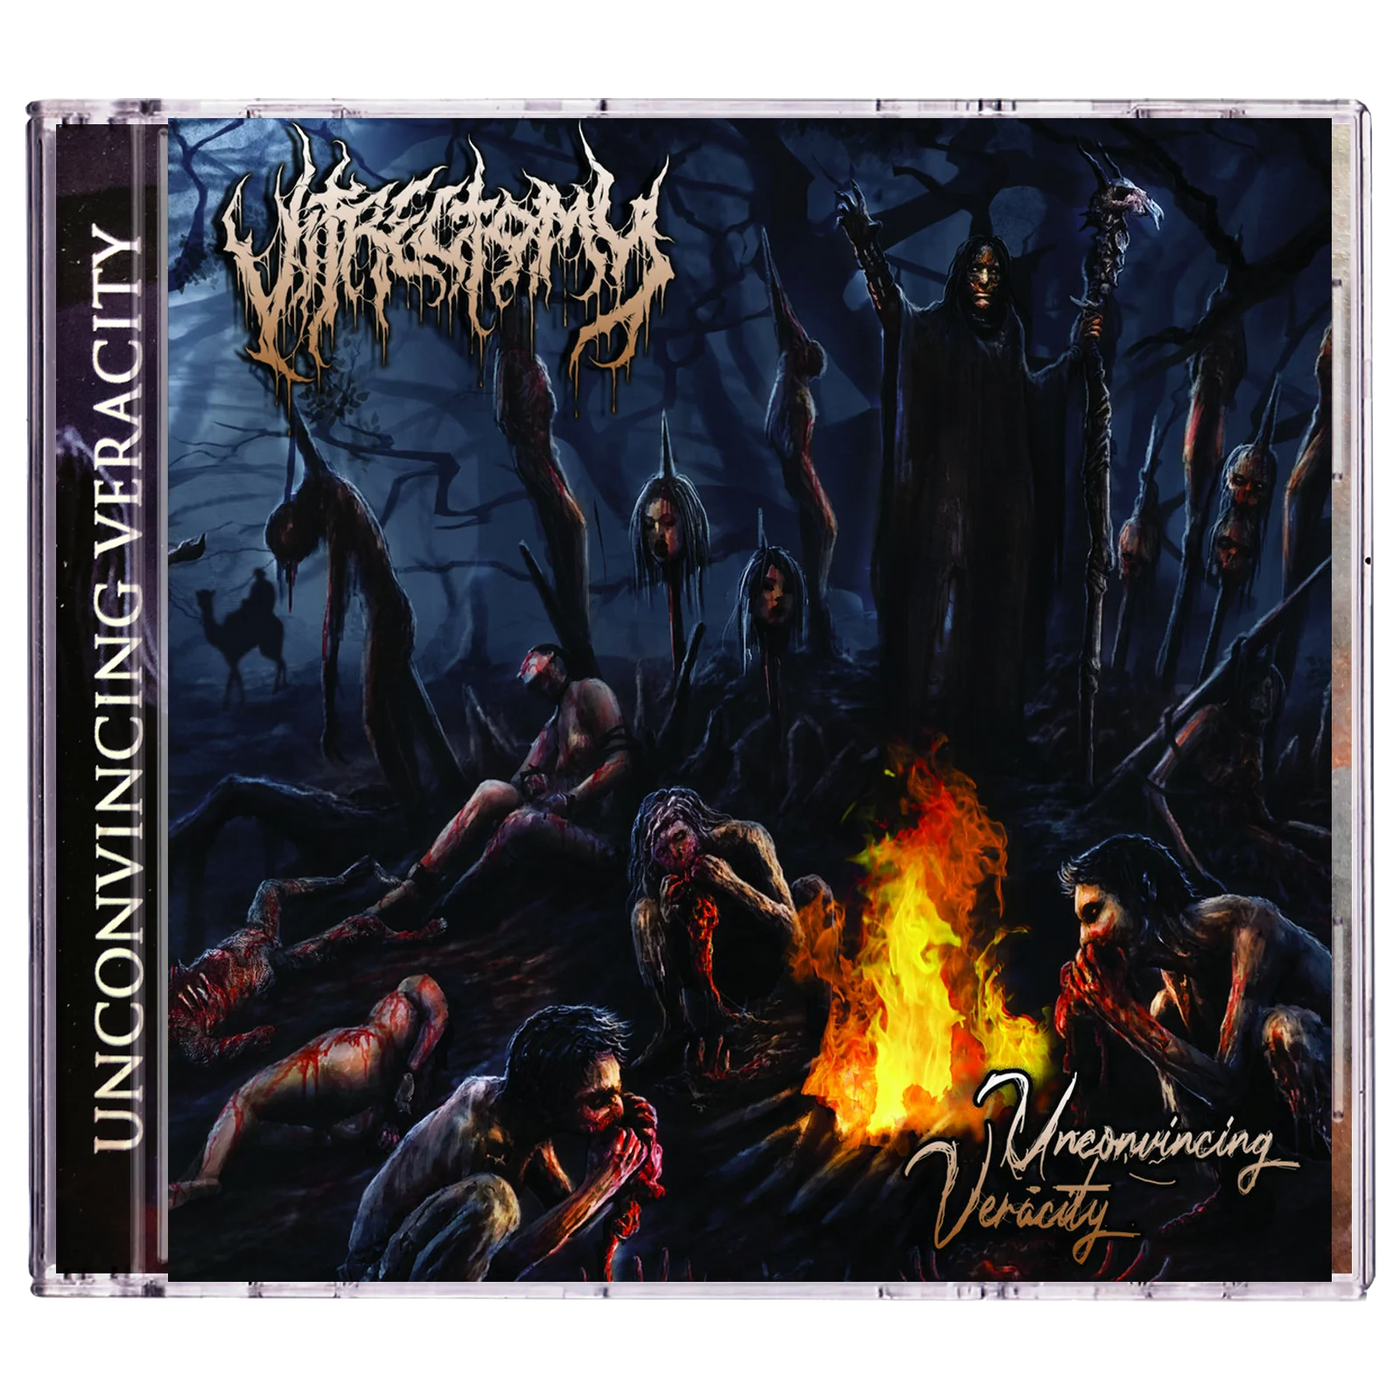 Vitrectomy 'Unconvincing Veracity' CD